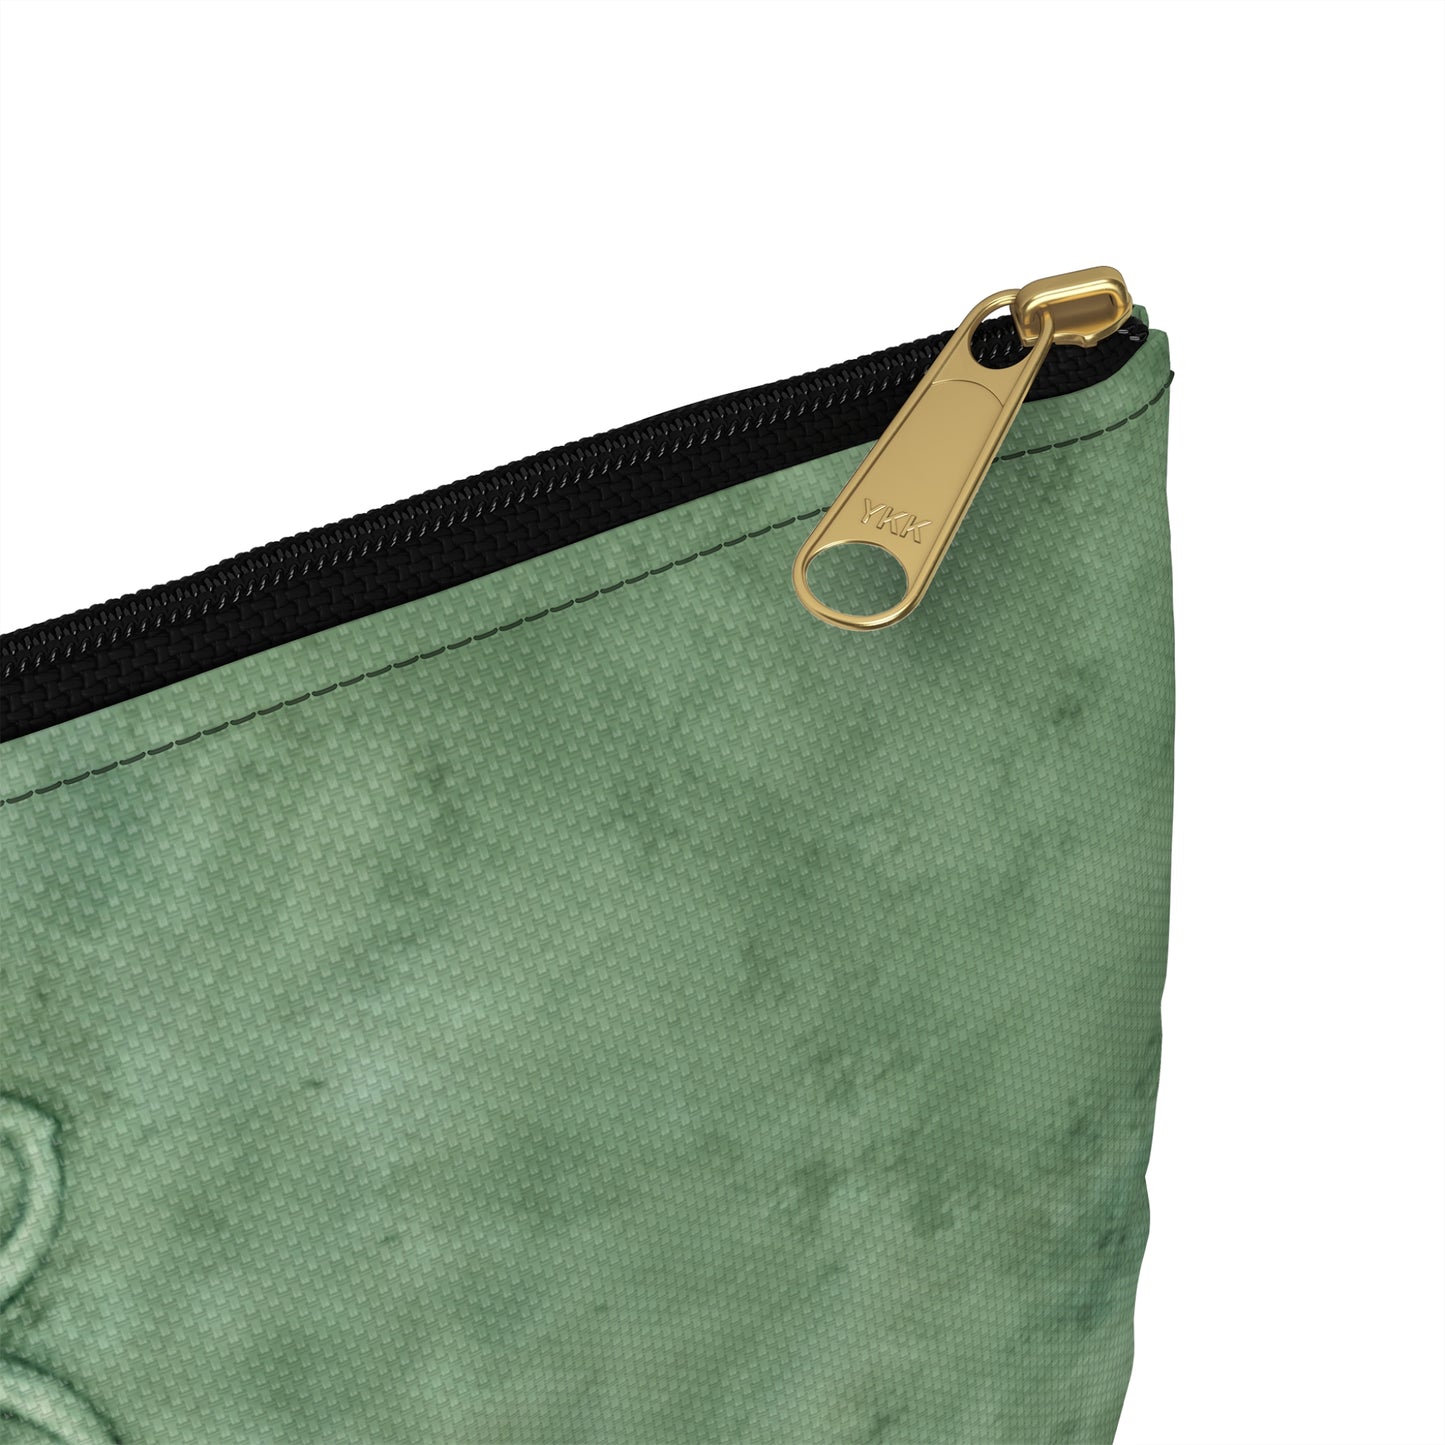 Accessory Bag - Birthstones - Emerald